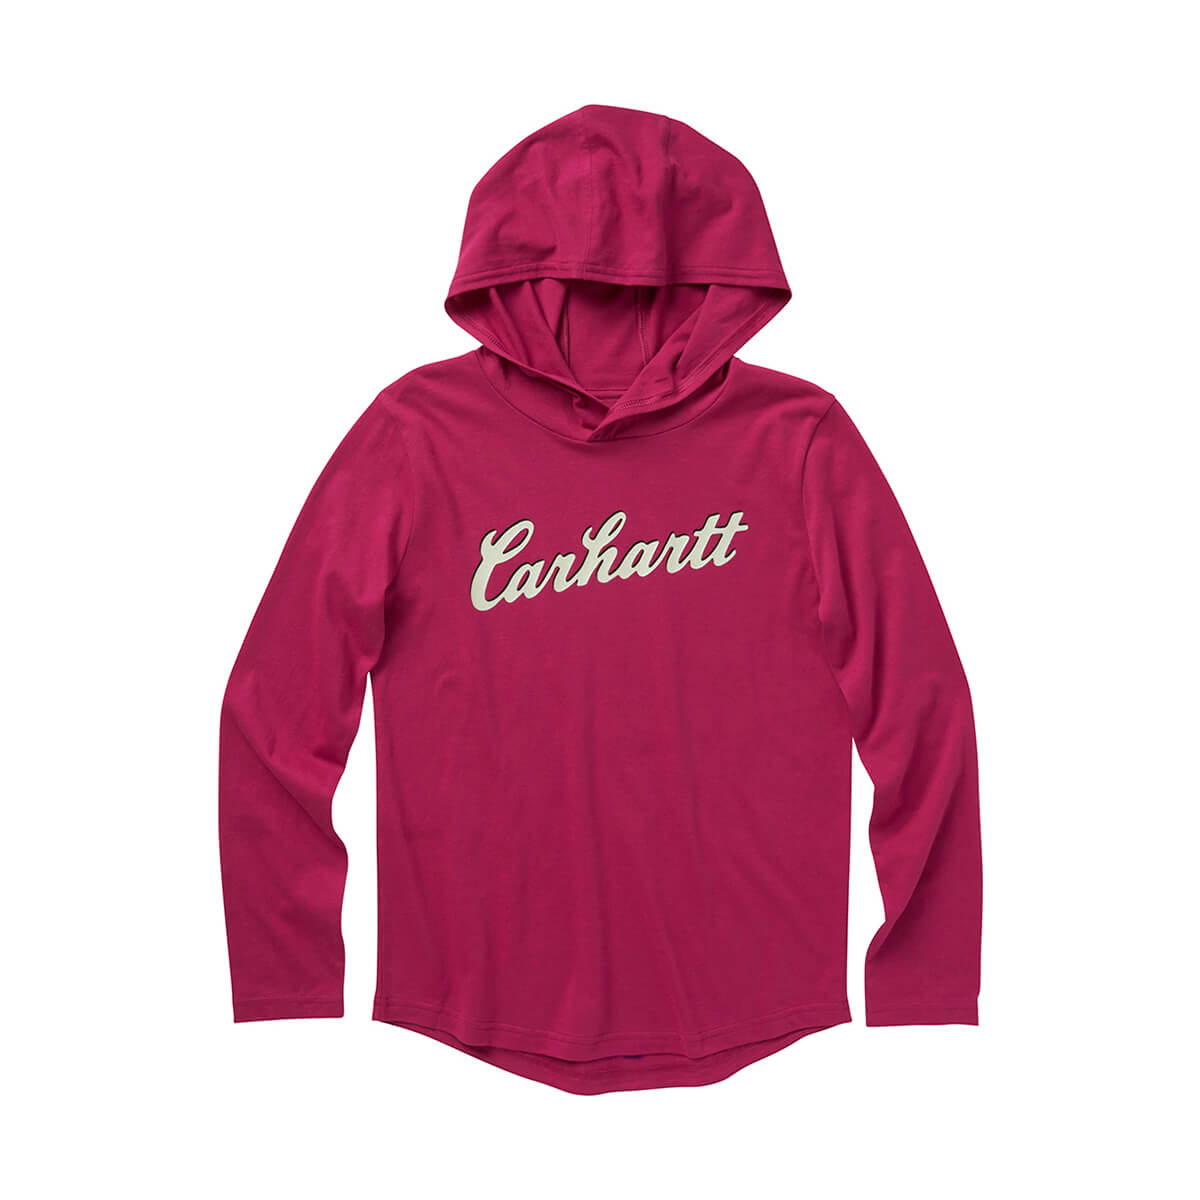 Carhartt Toddler's Long-Sleeve Hooded Cursive Logo T-Shirt - Fuchsia